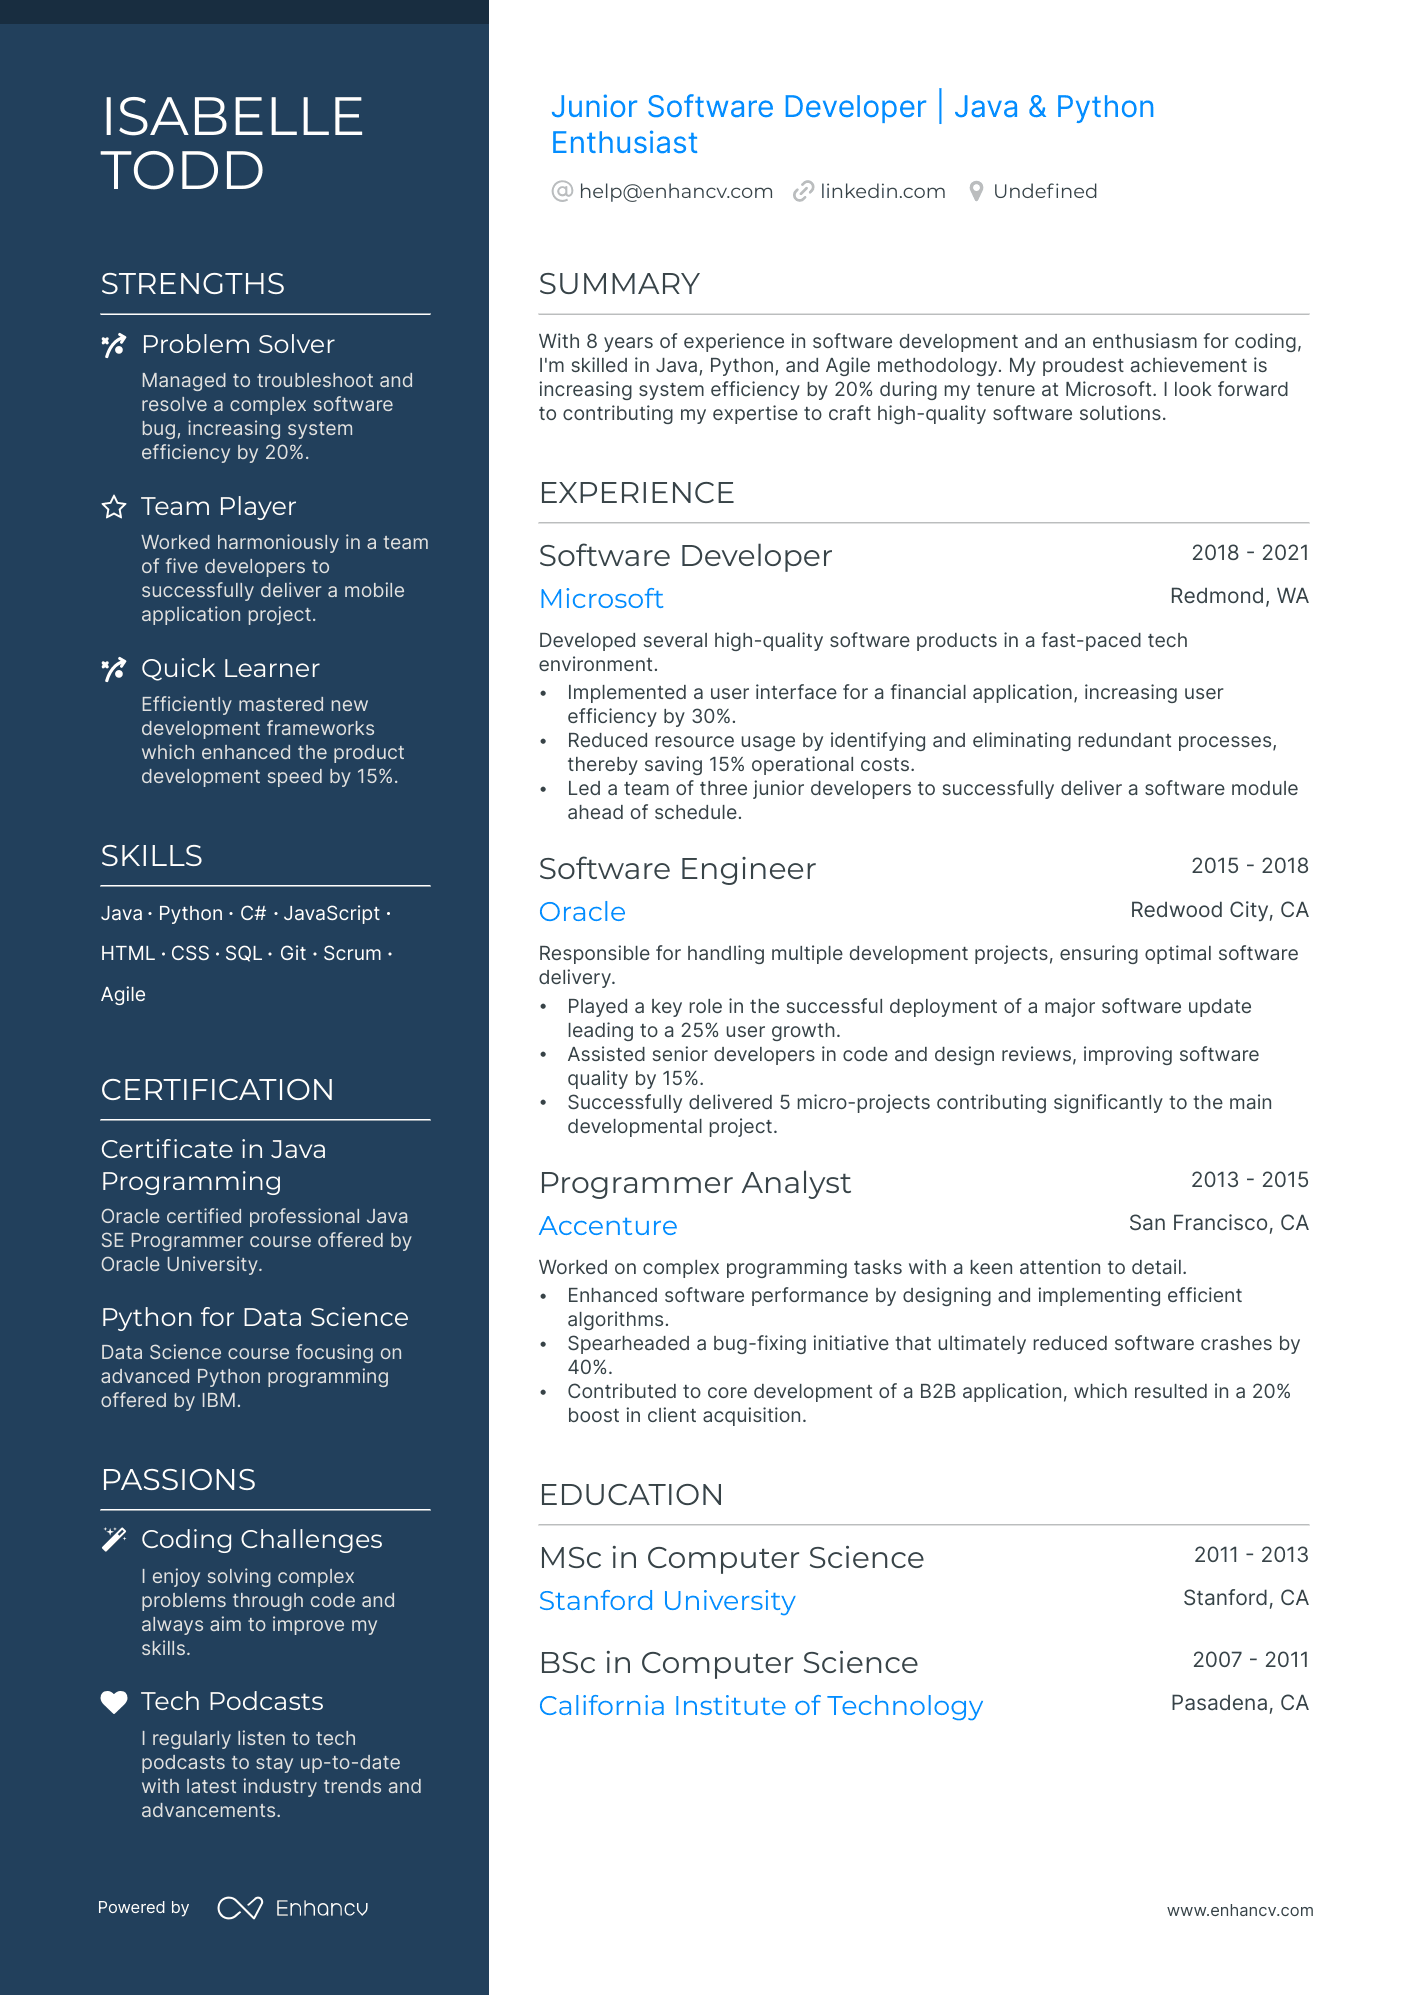 Junior Software Developer resume example